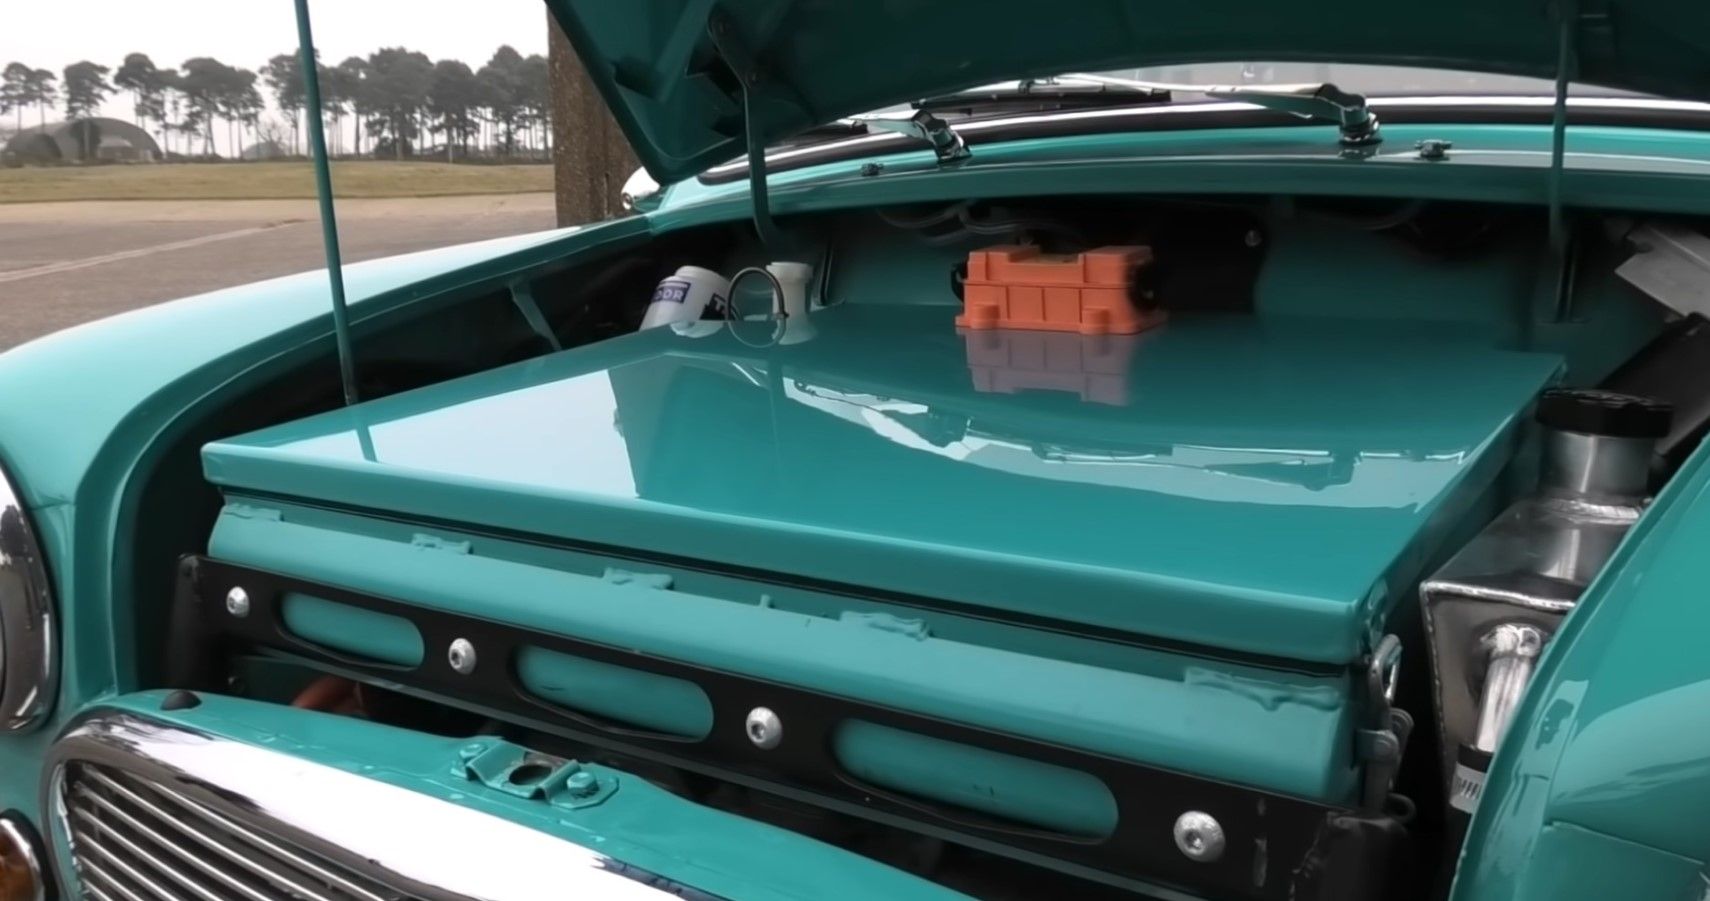 Classic Mini EV battery pack under the hood